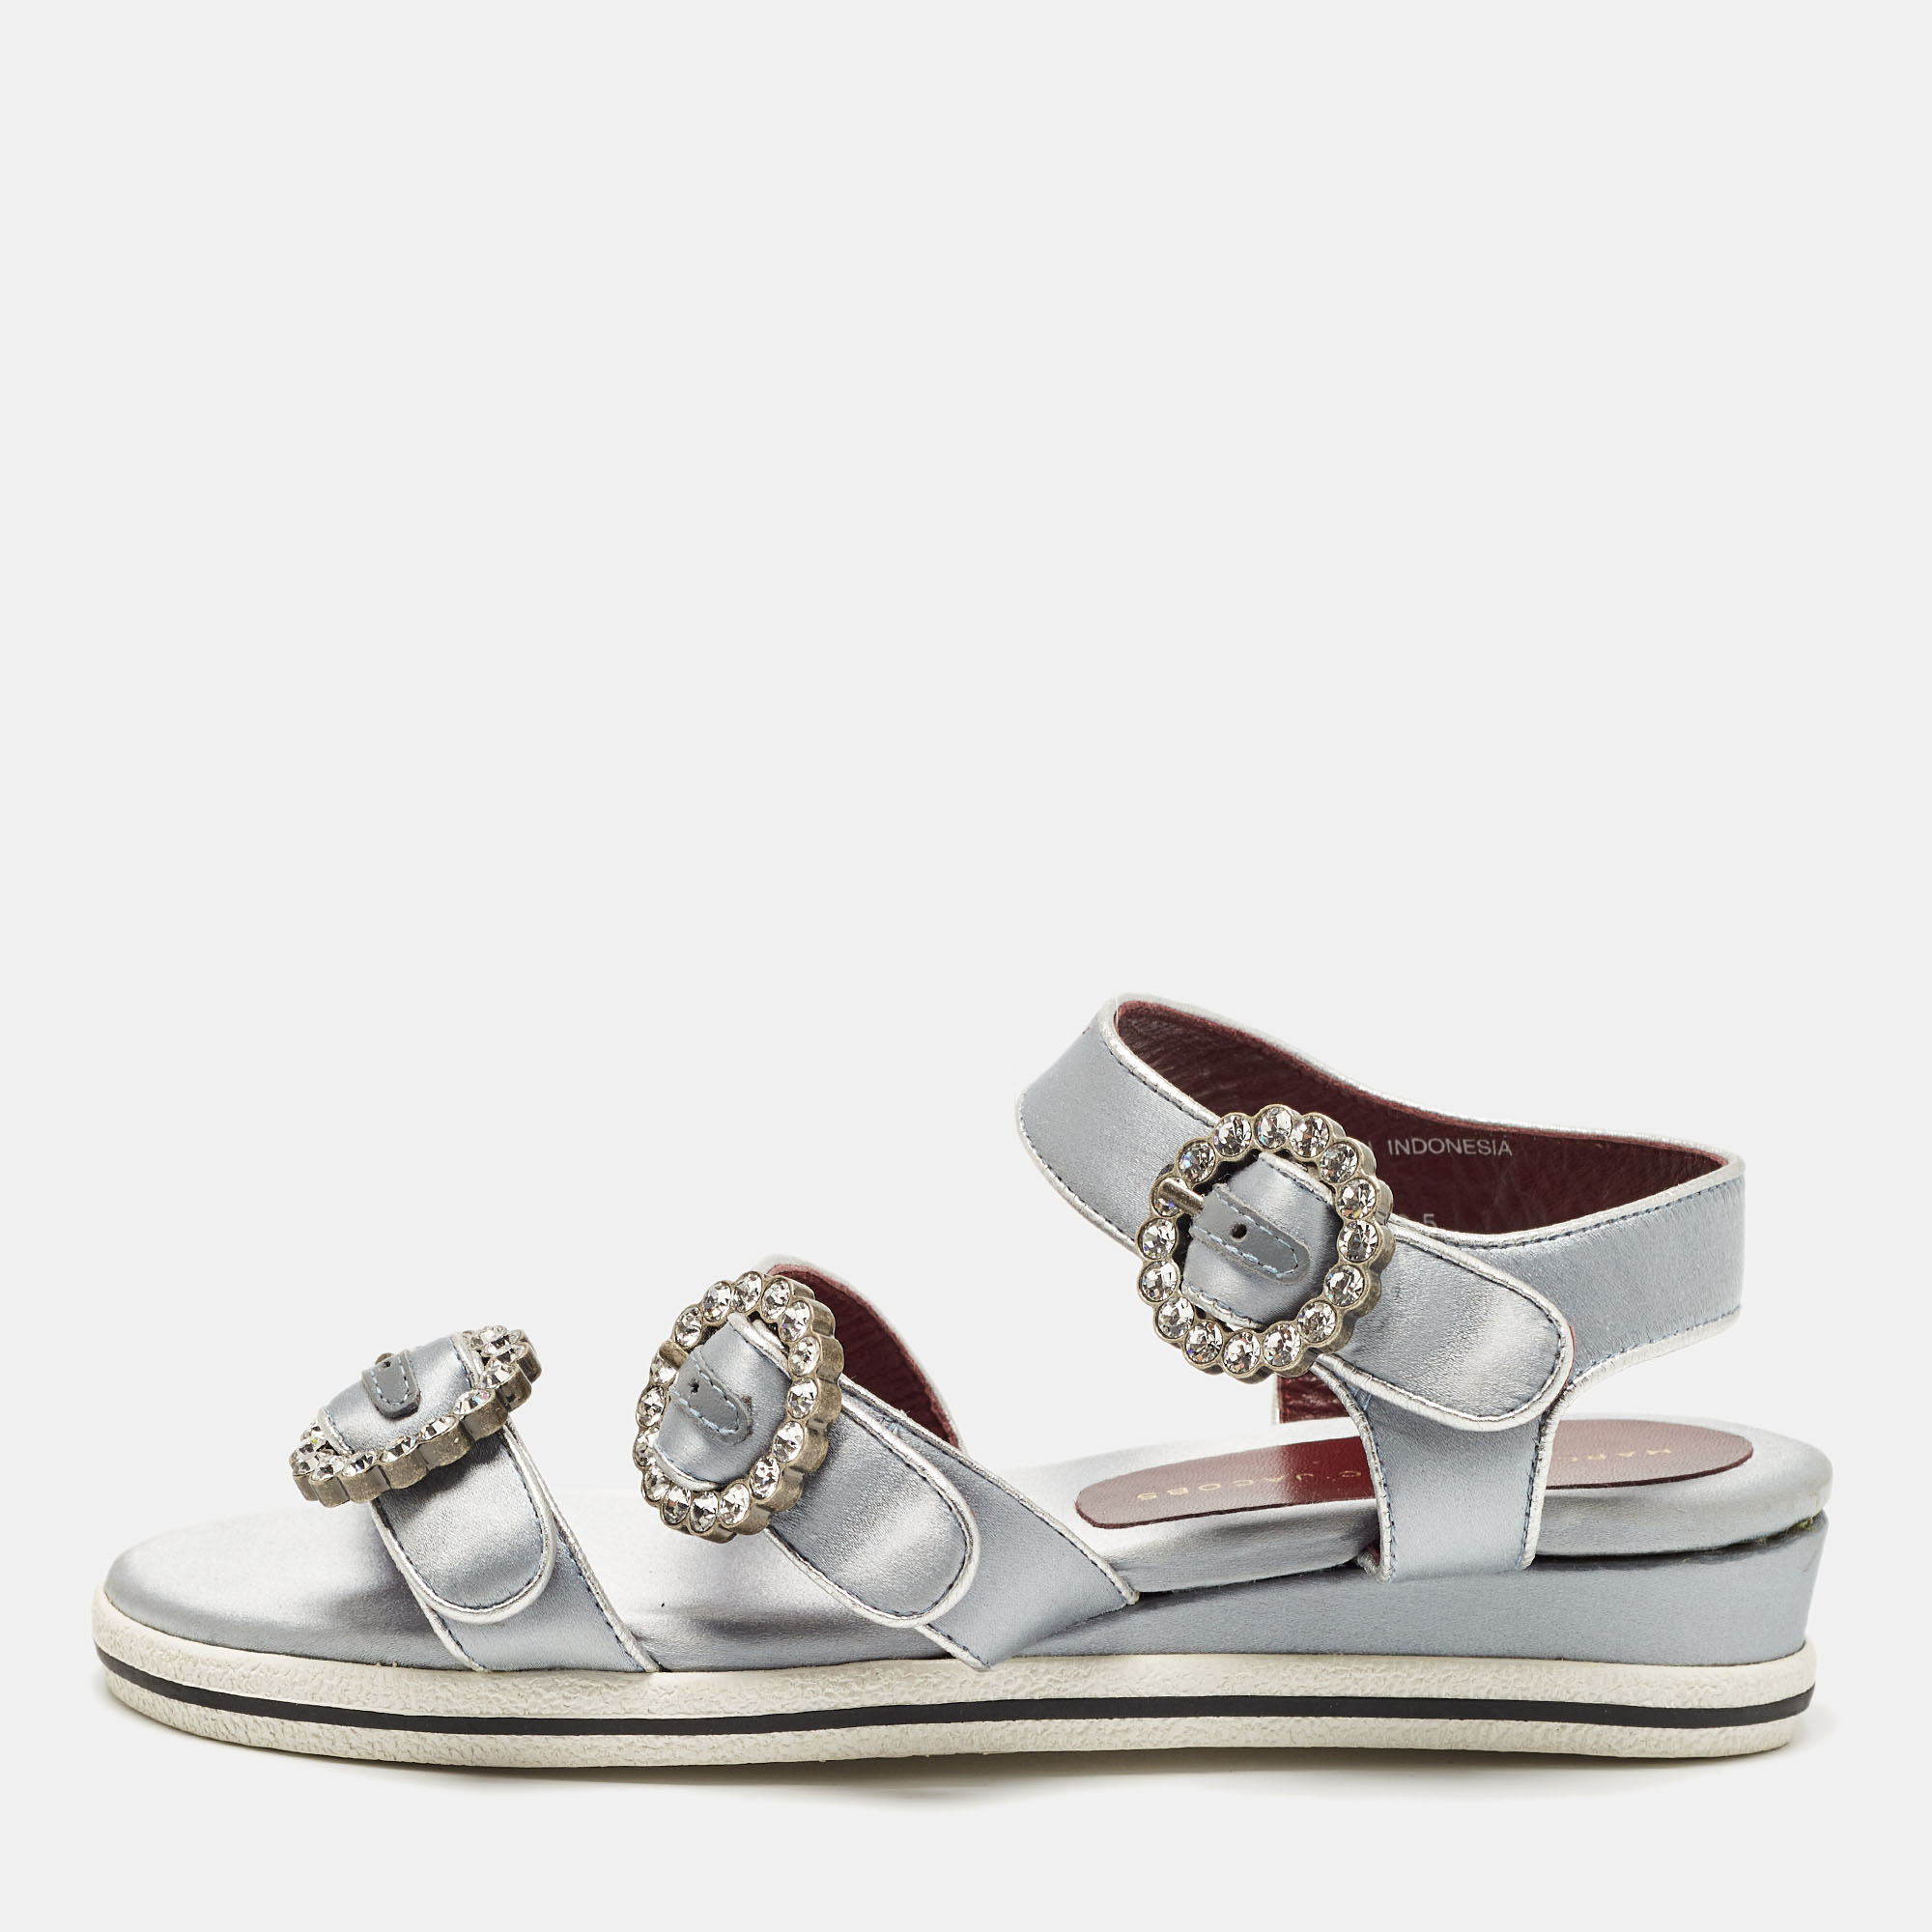 Marc by marc jacobs grey satin crystal embellished slingback sandals size 36.5